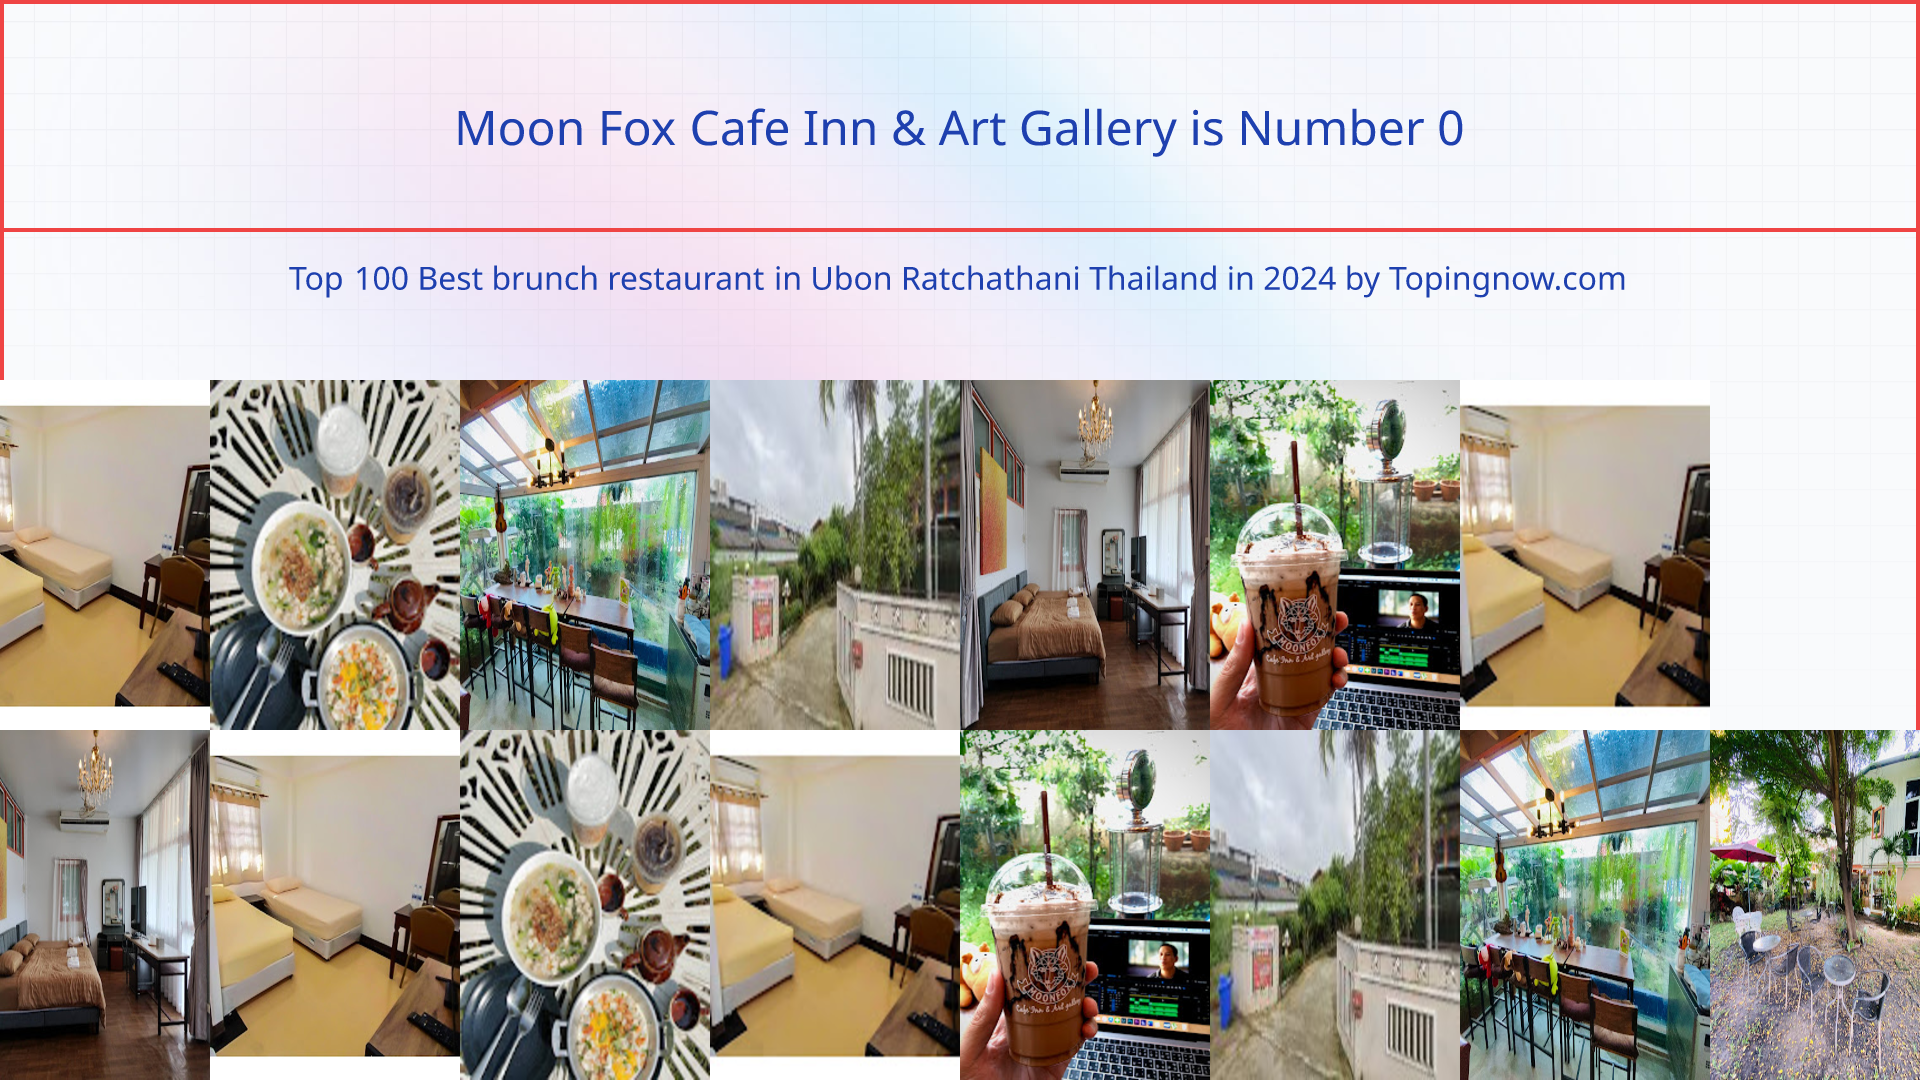 Moon Fox Cafe Inn & Art Gallery: Top 100 Best brunch restaurant in Ubon Ratchathani Thailand in 2024